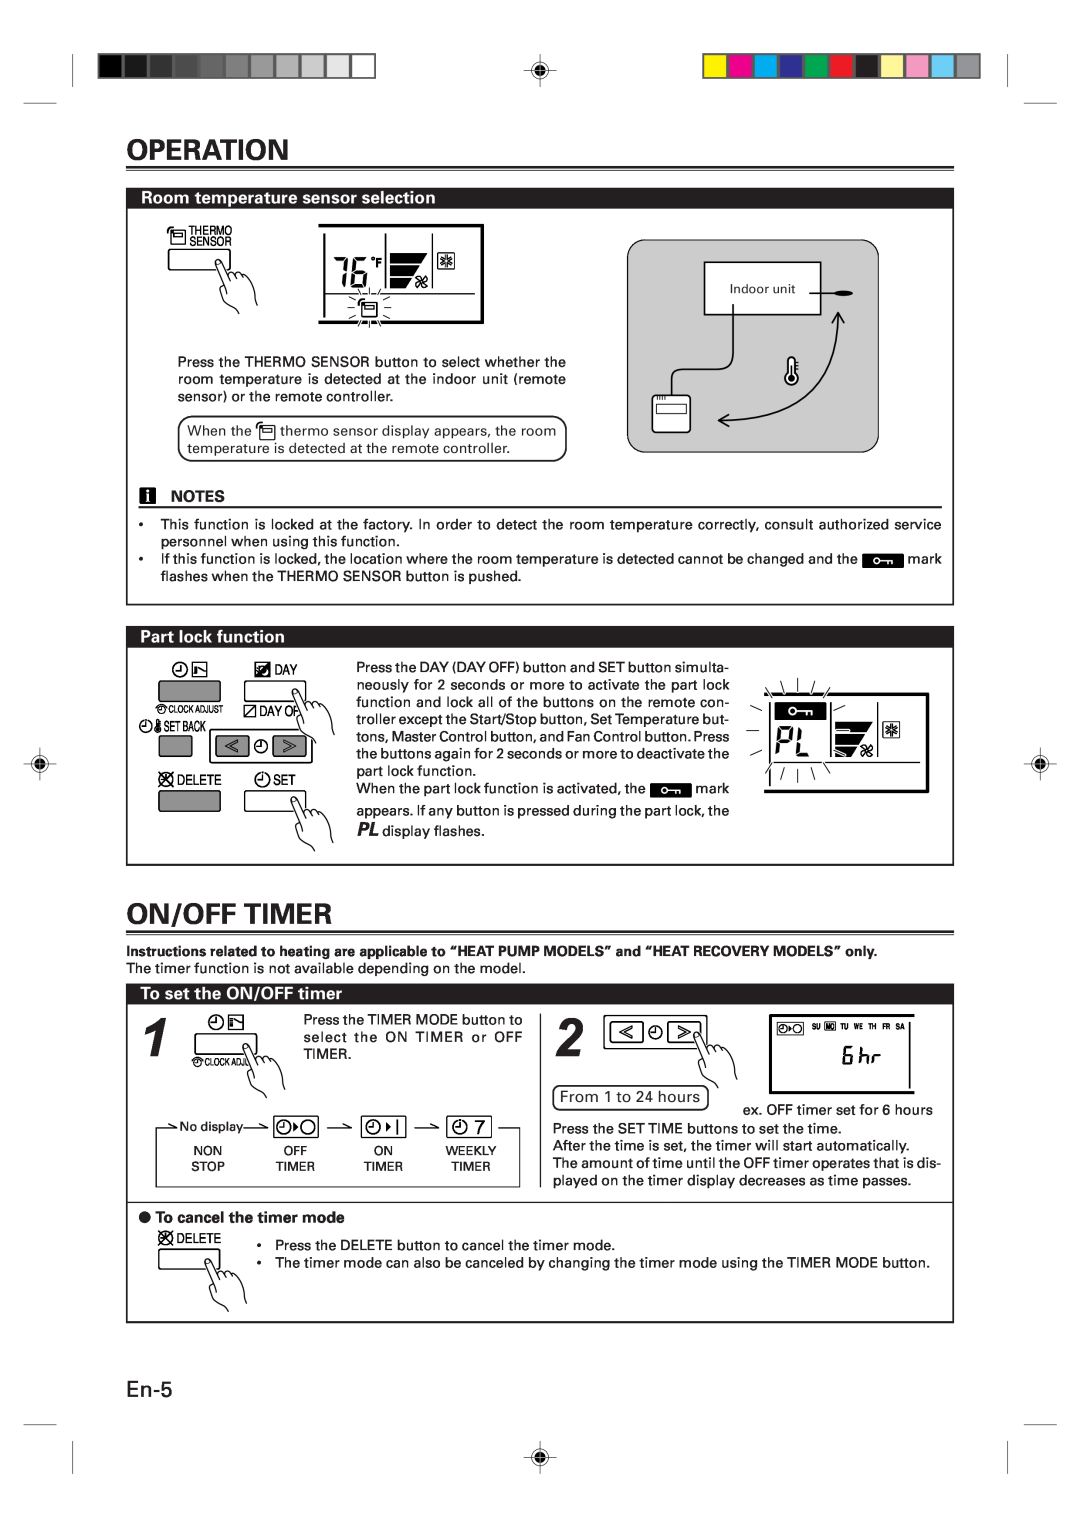 Fujitsu UTB-UUB manual On/Off Timer, En-5, Room temperature sensor selection, Part lock function, To set the ON/OFF timer 